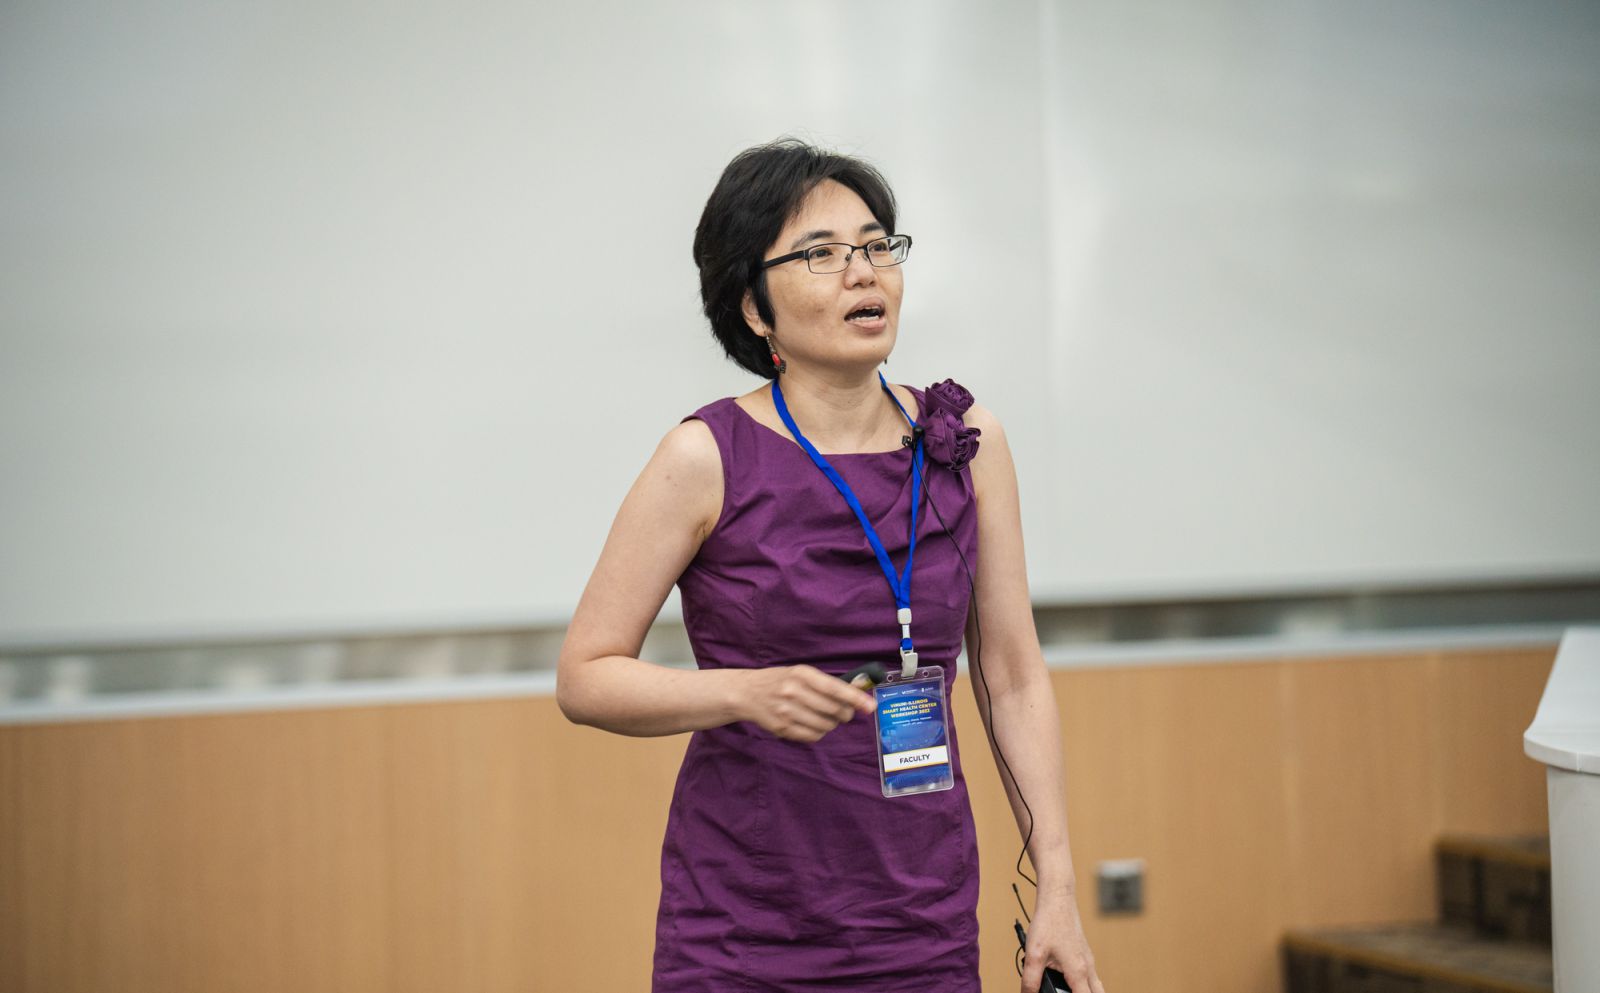 GS. Helen Nguyễn